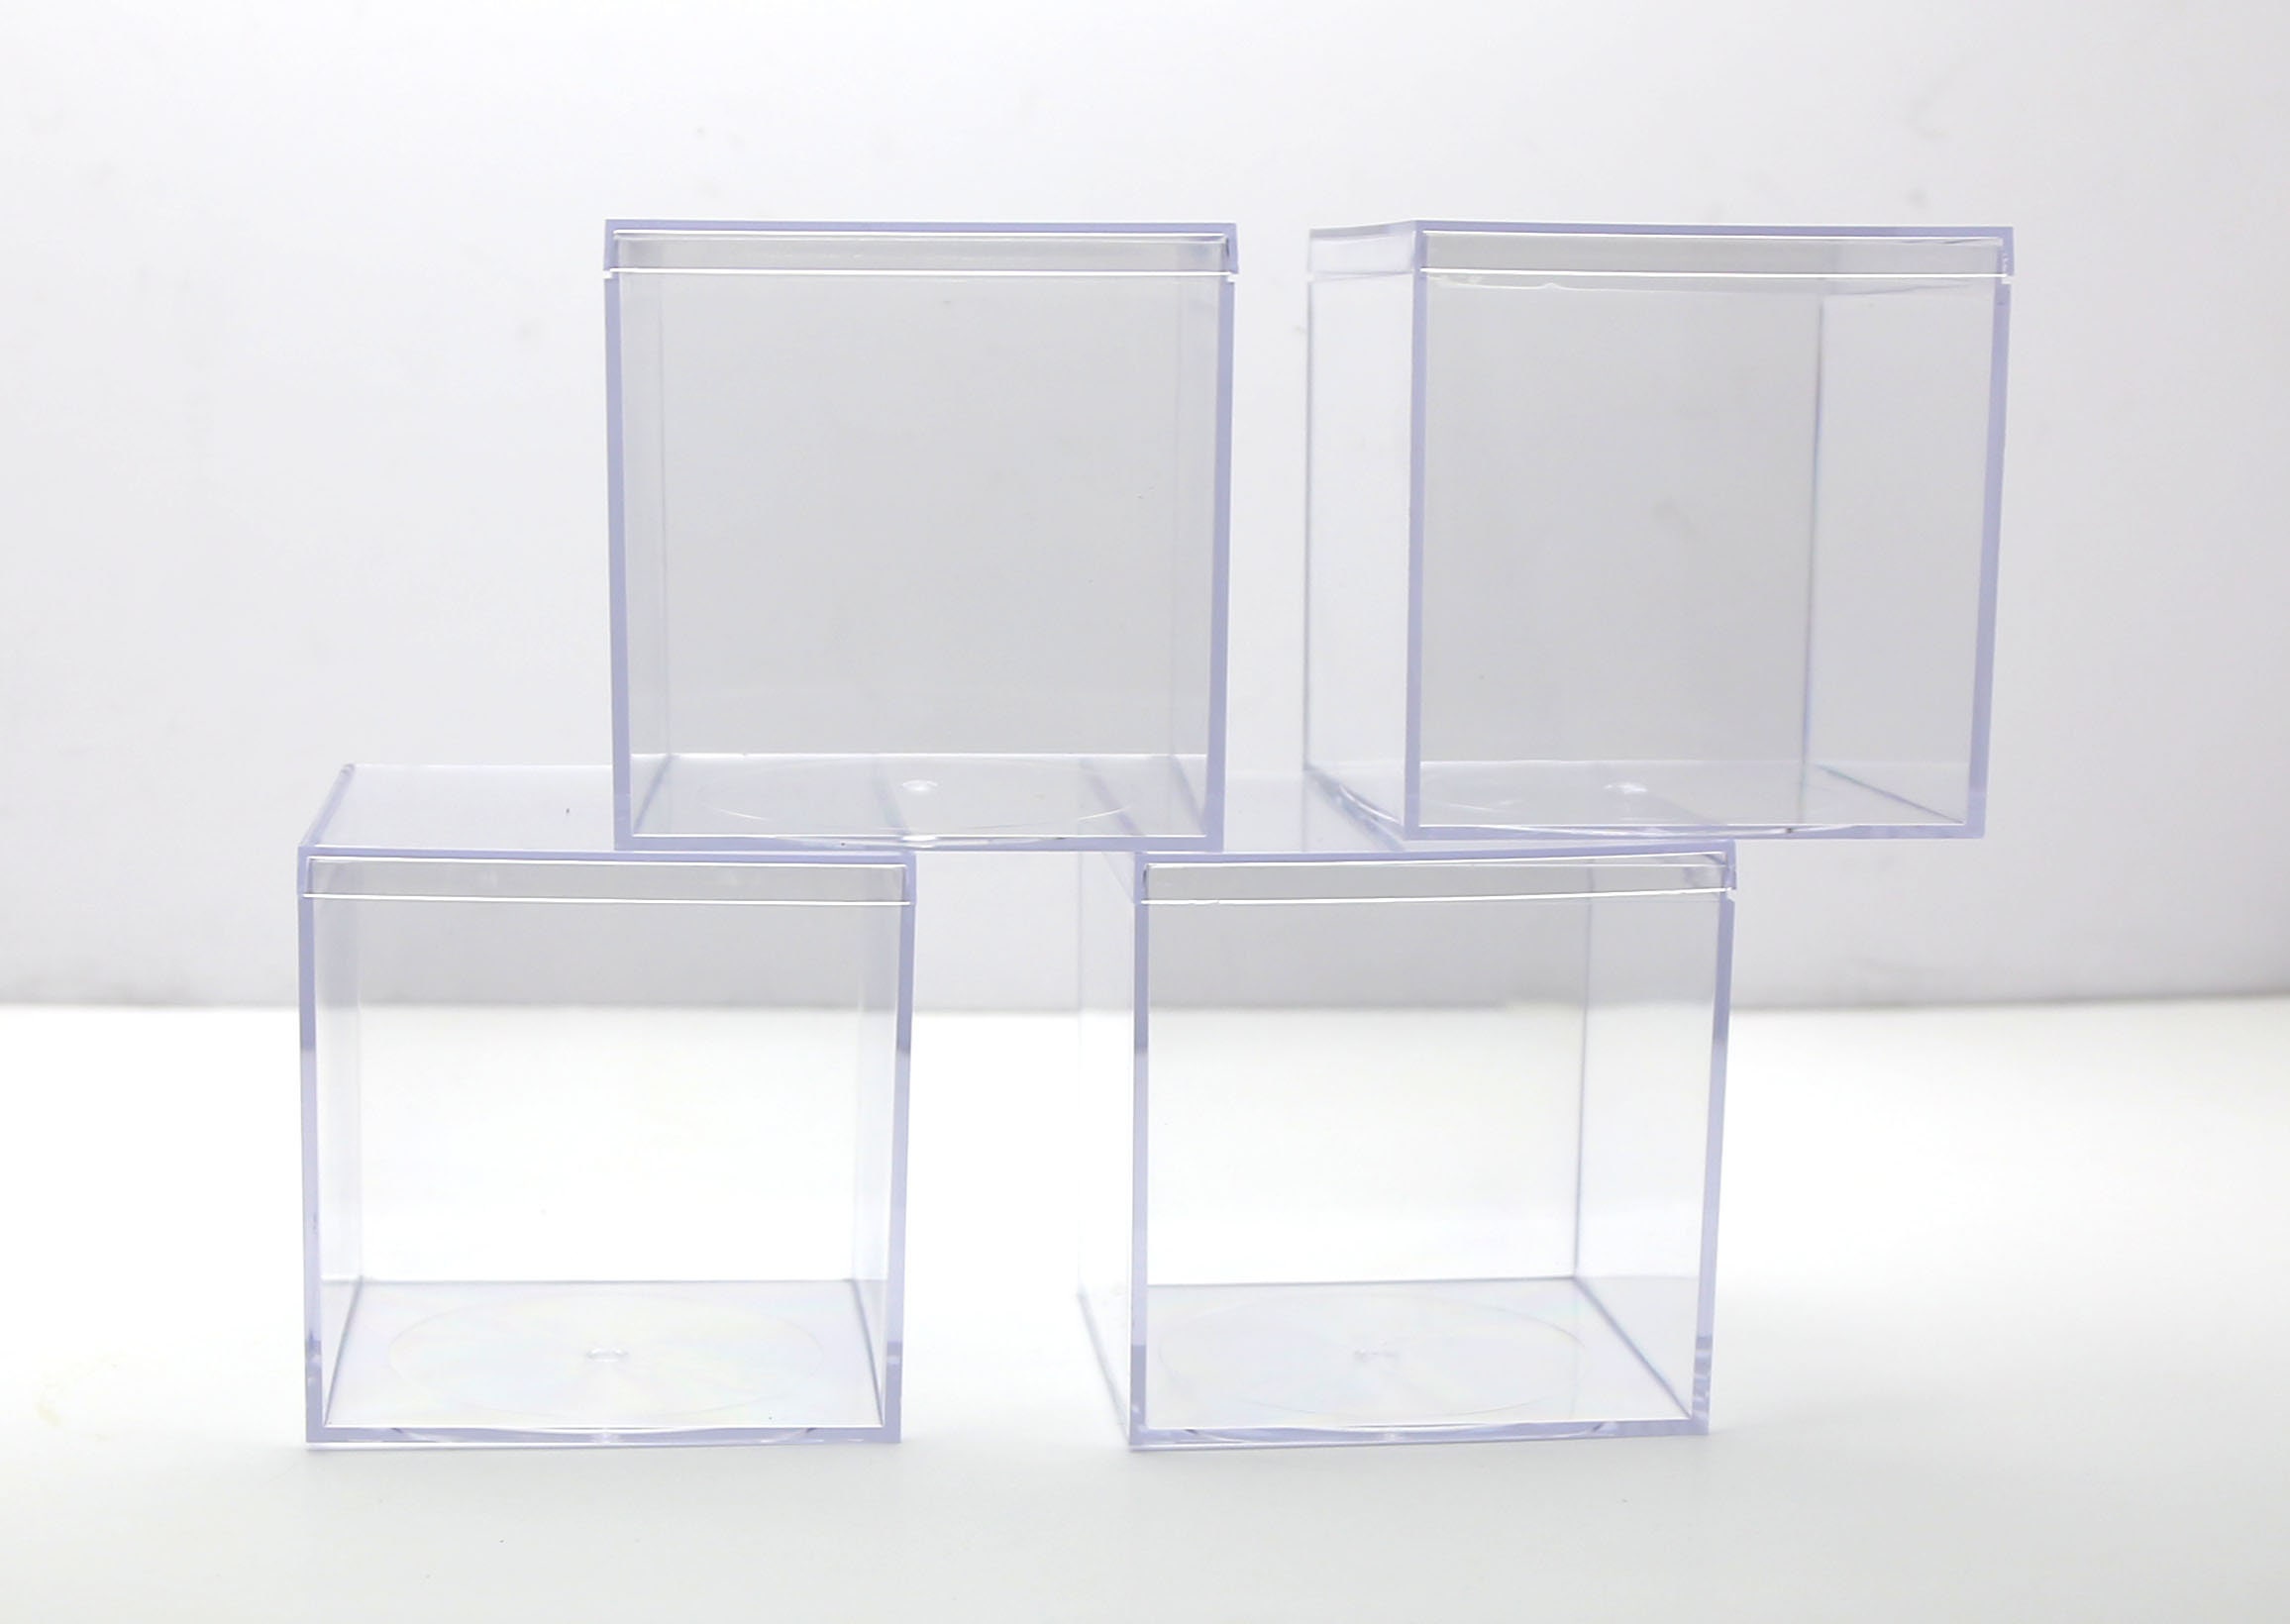 Clear Pet Plastic Storage Boxes 24 Pack 2x2x2